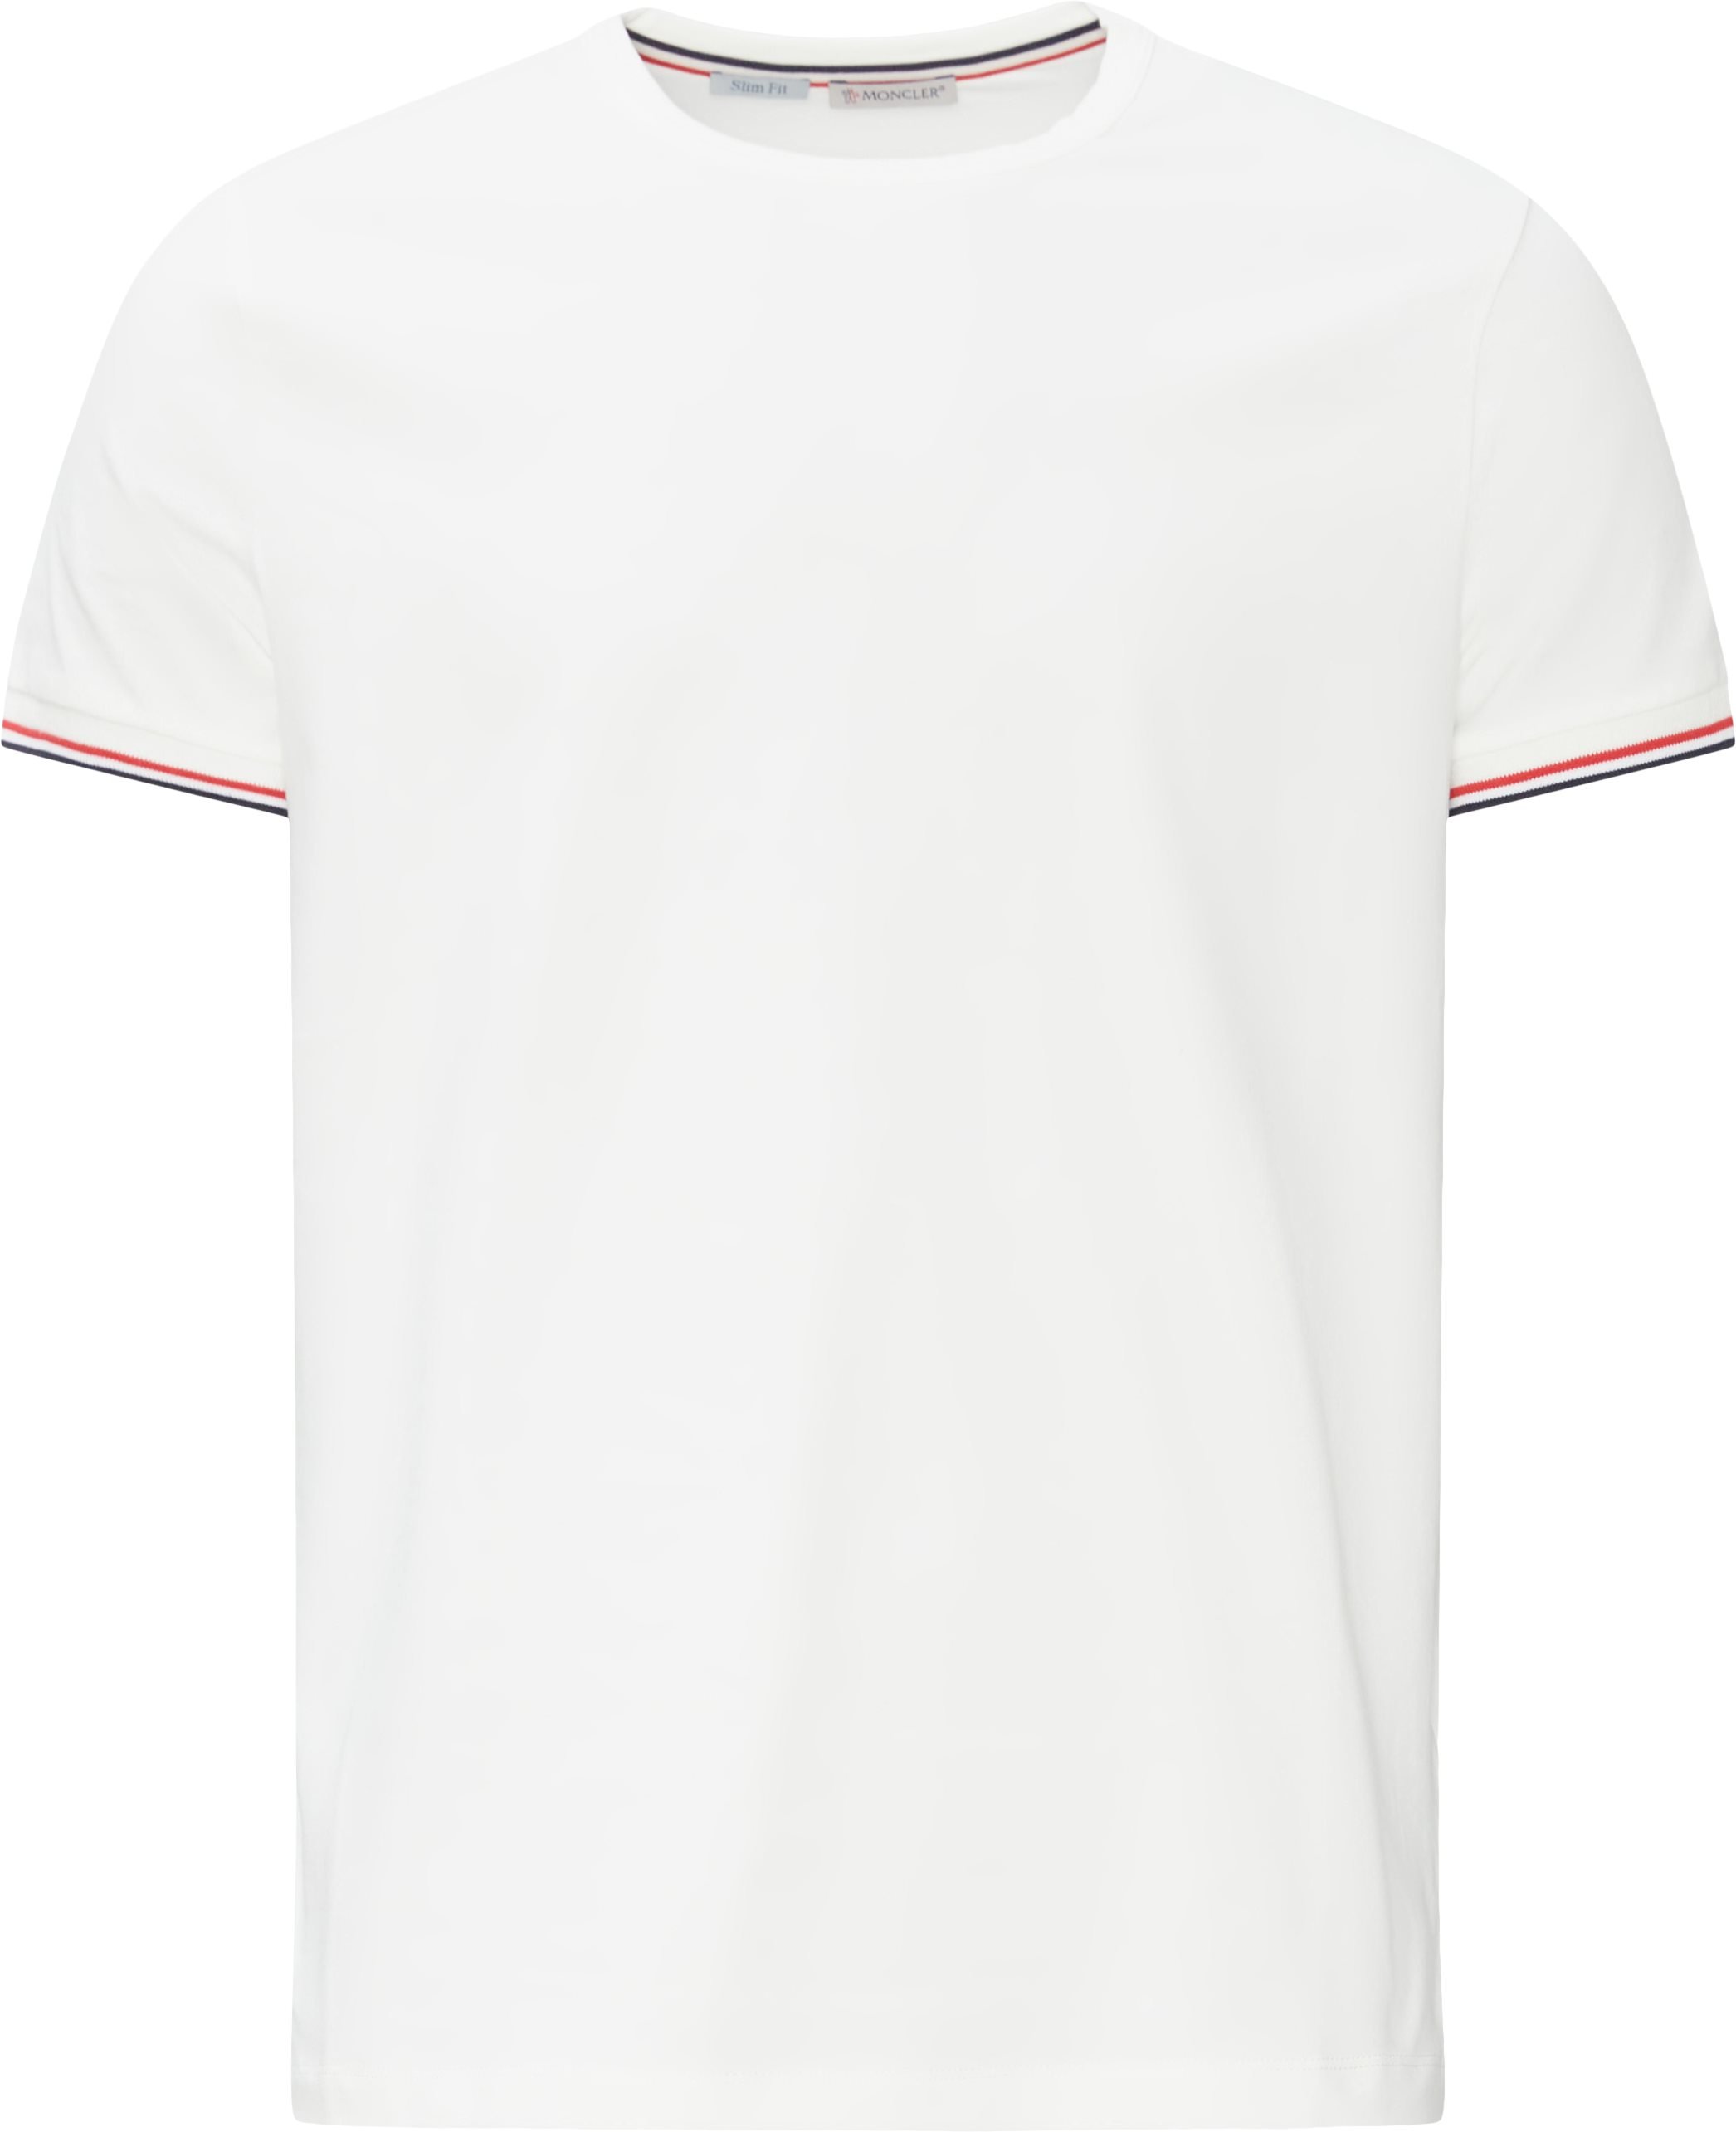 T-shirts - Slim fit - White